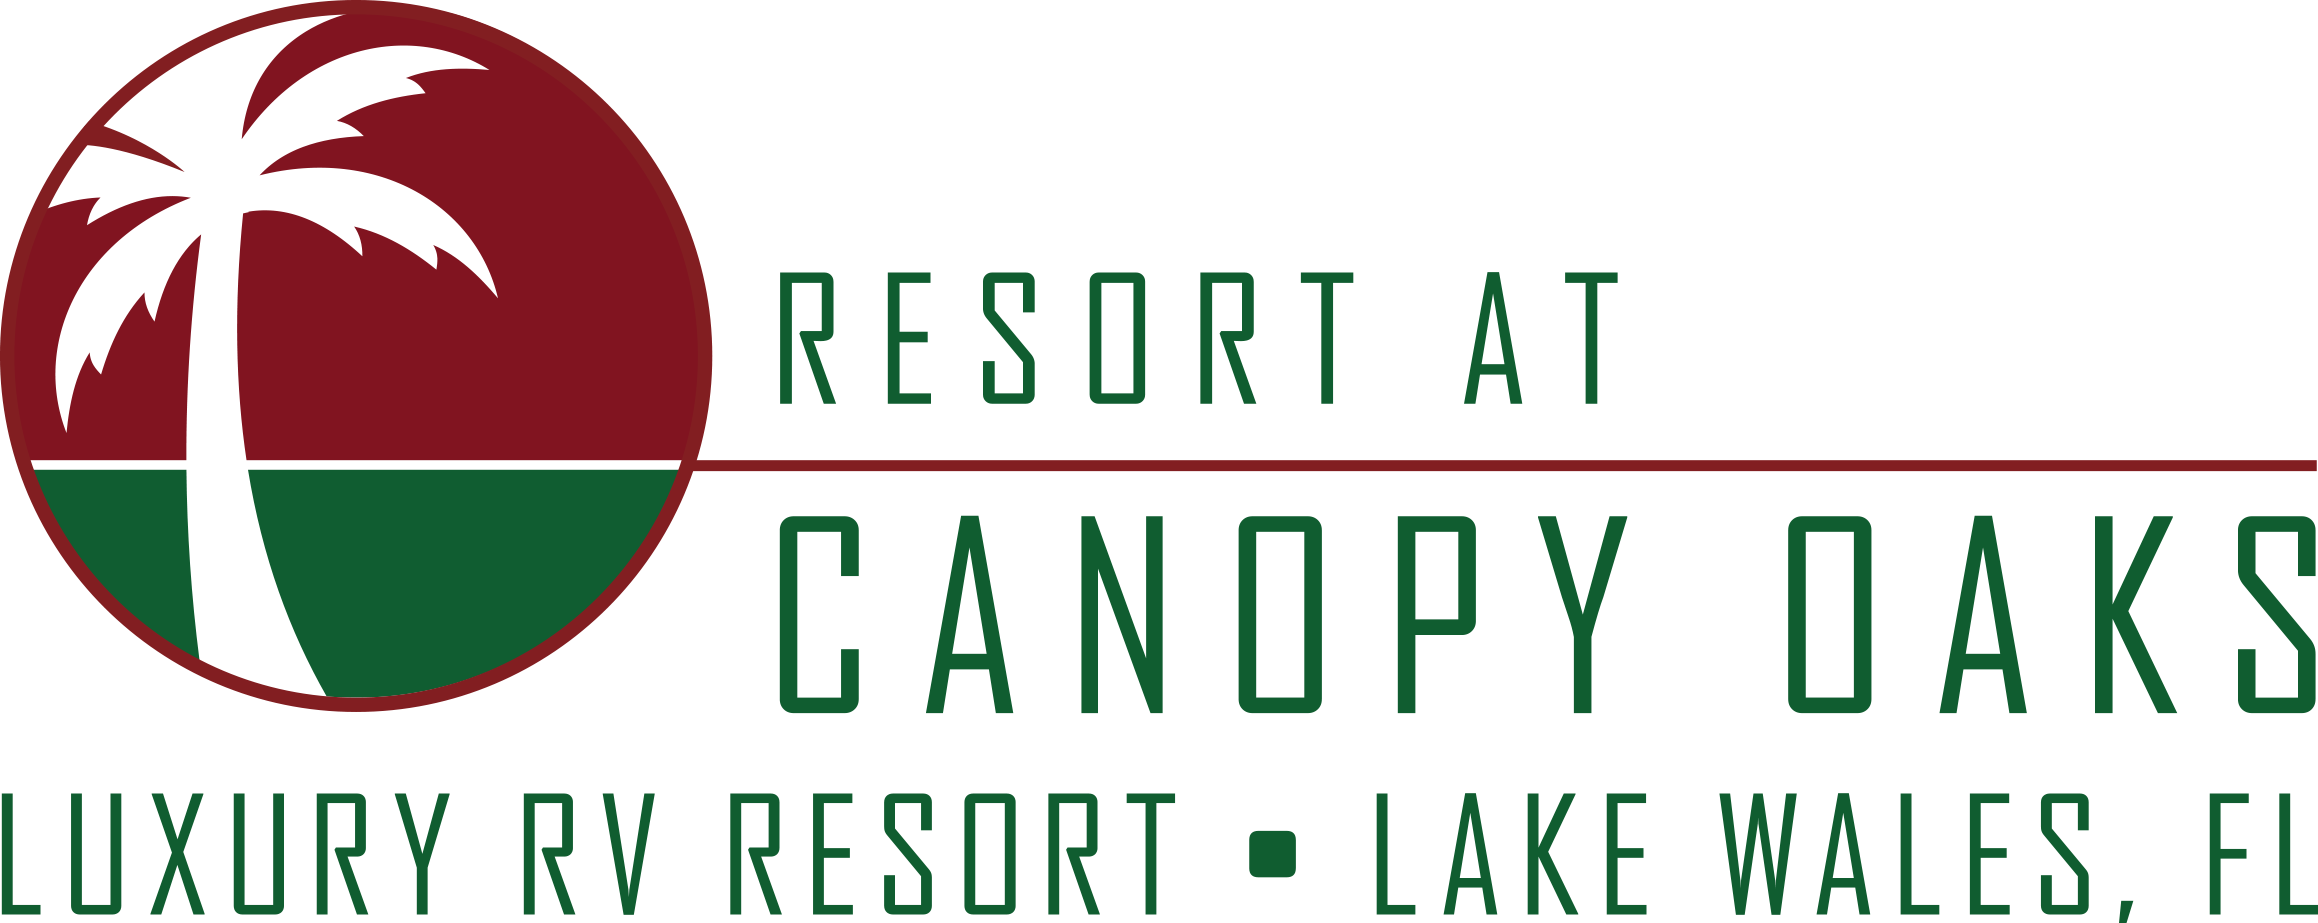 Resort at Canopy Oaks